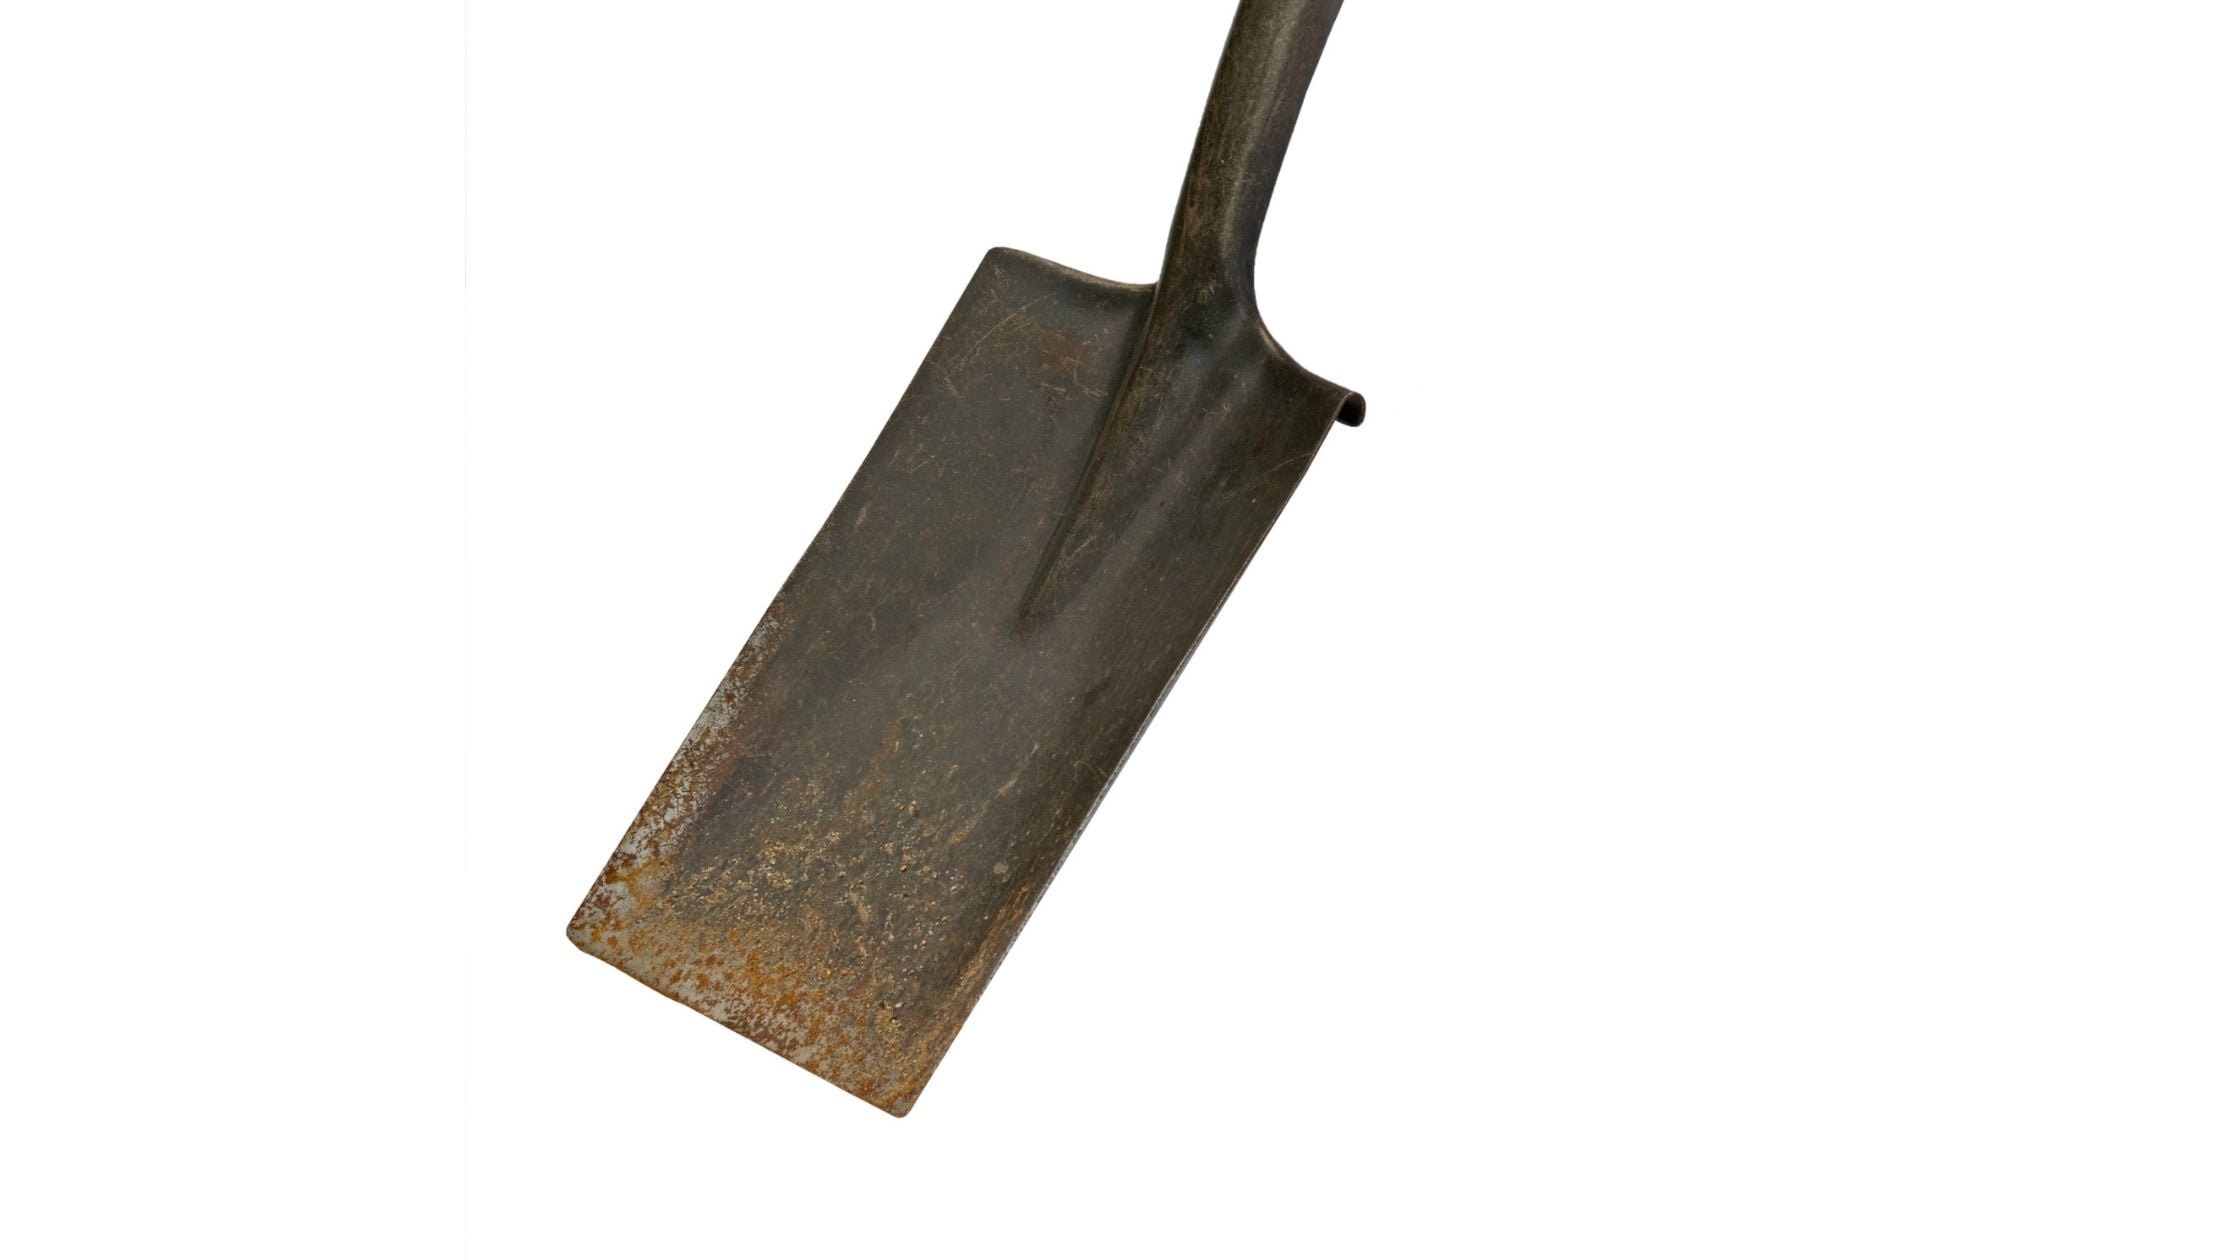 Types of shovels: square shovel